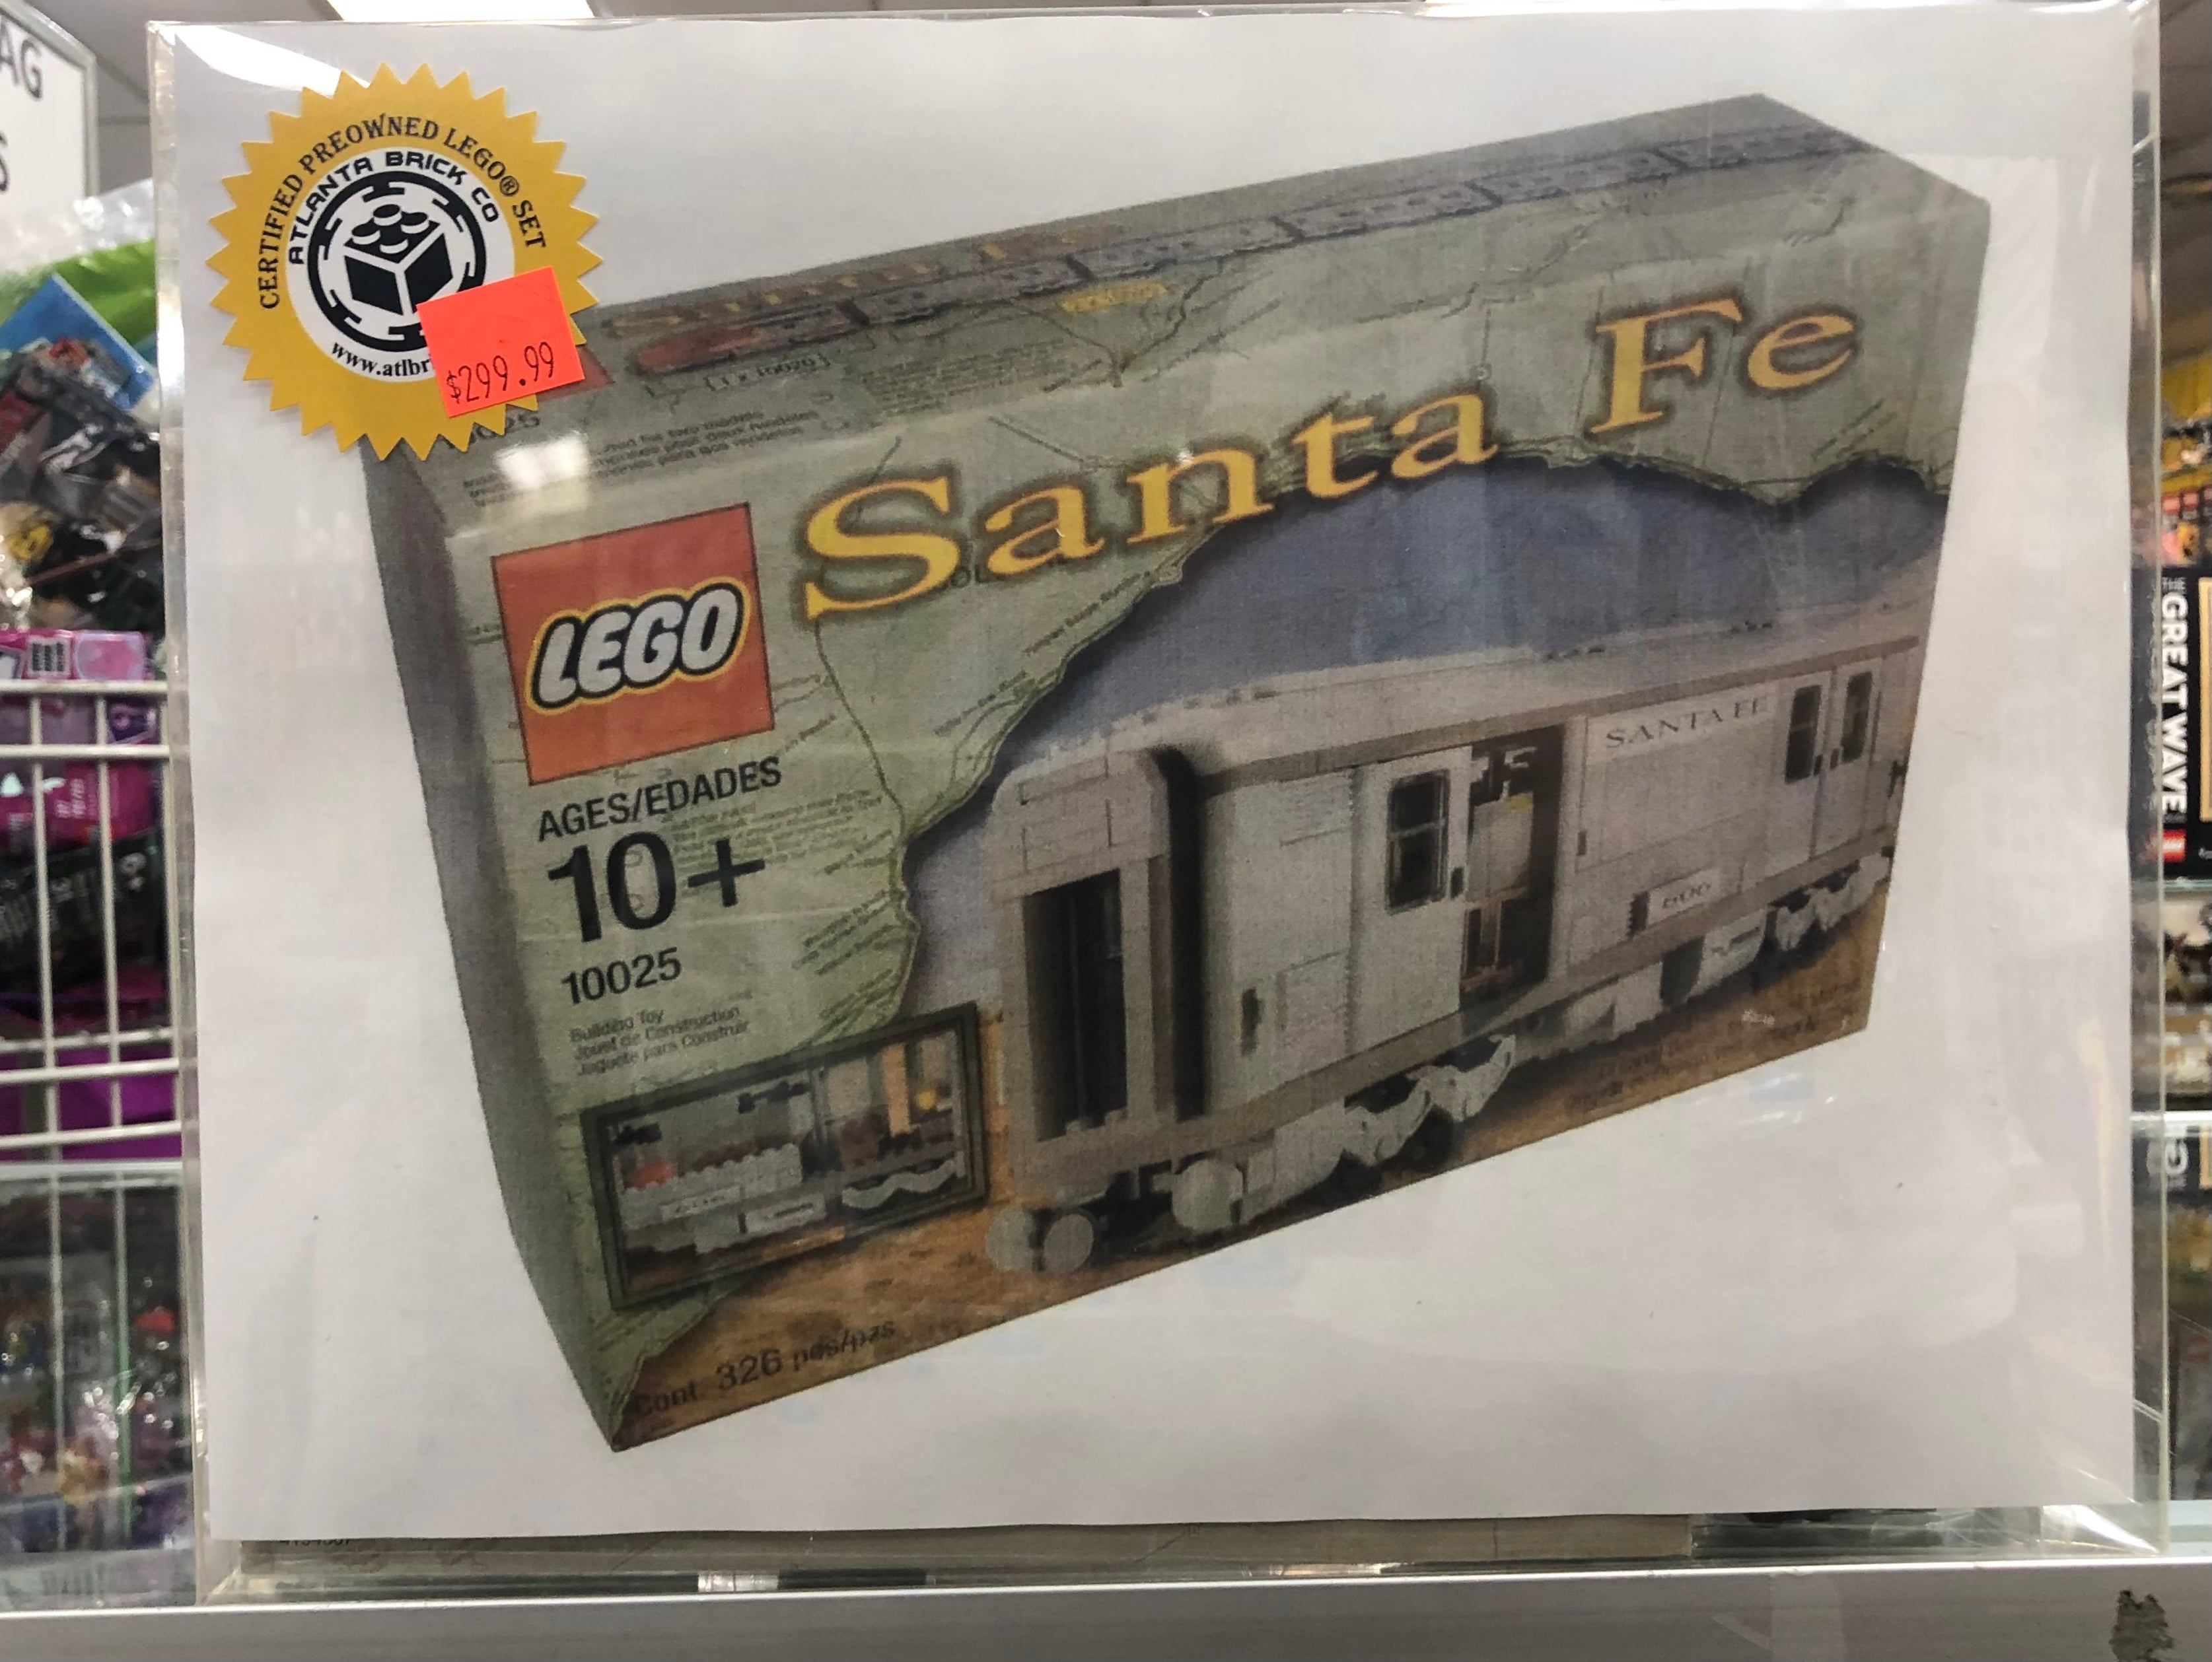 Santa Fe Cars - Set I (mail or baggage car), 10025